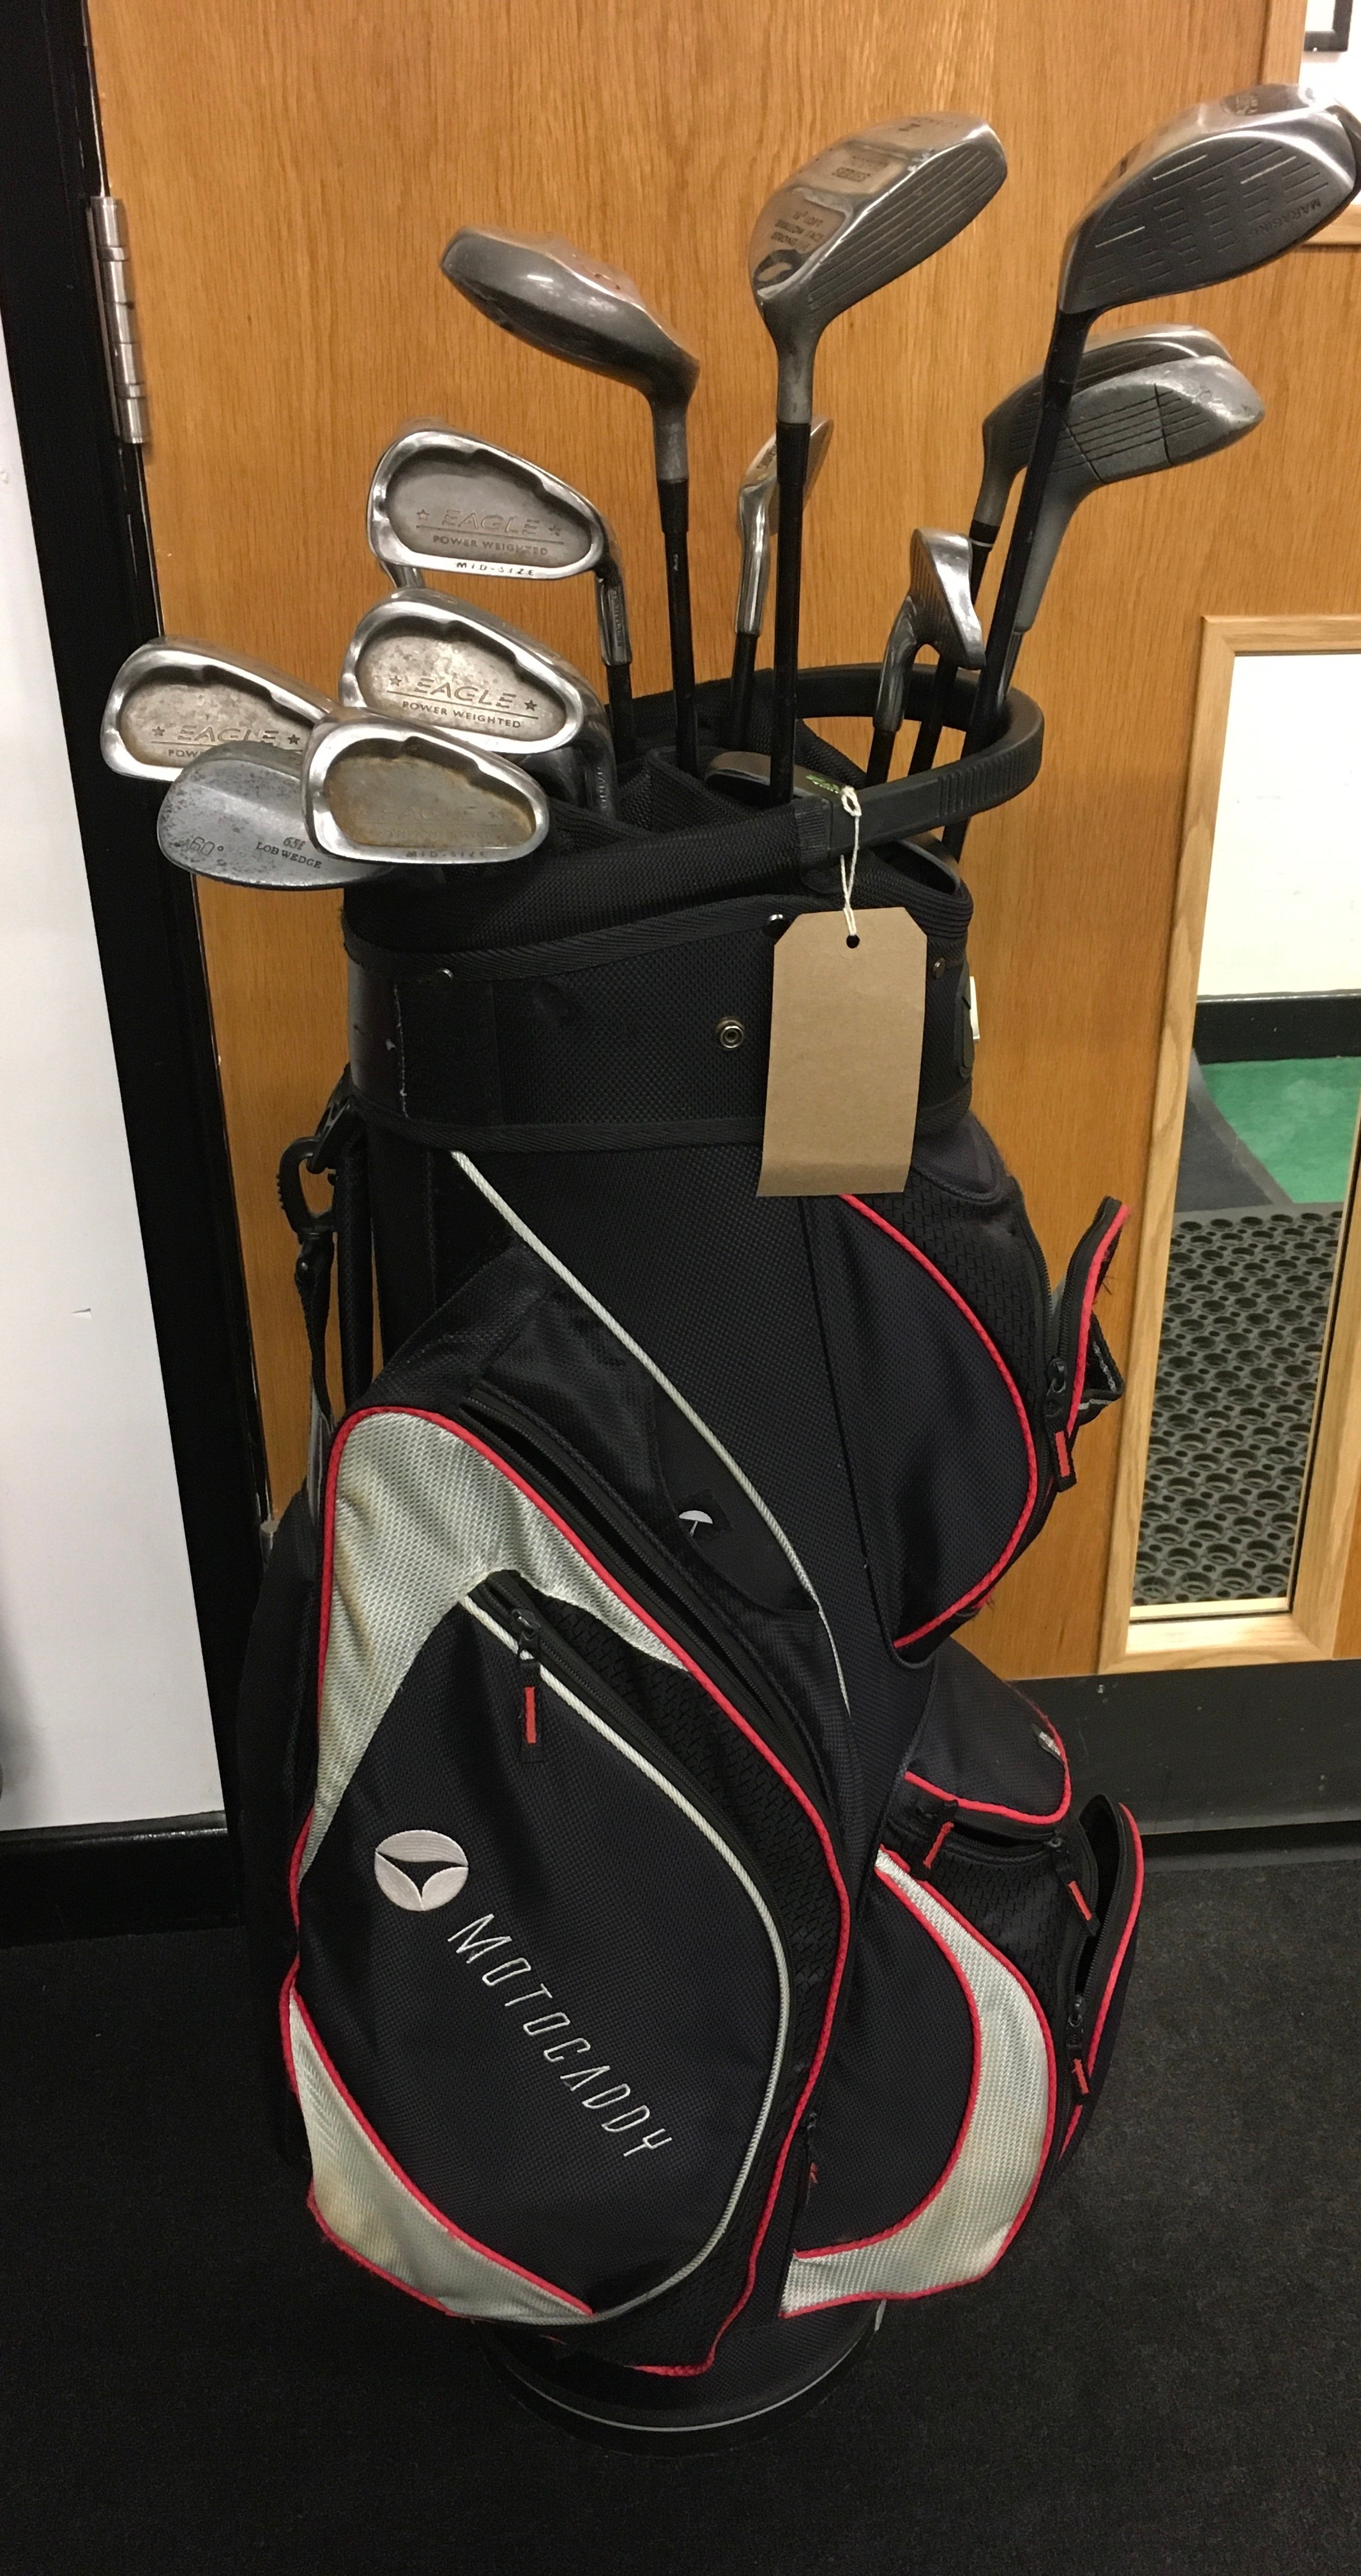 A set of golf clubs in motorcaddy bag. (74) (12)